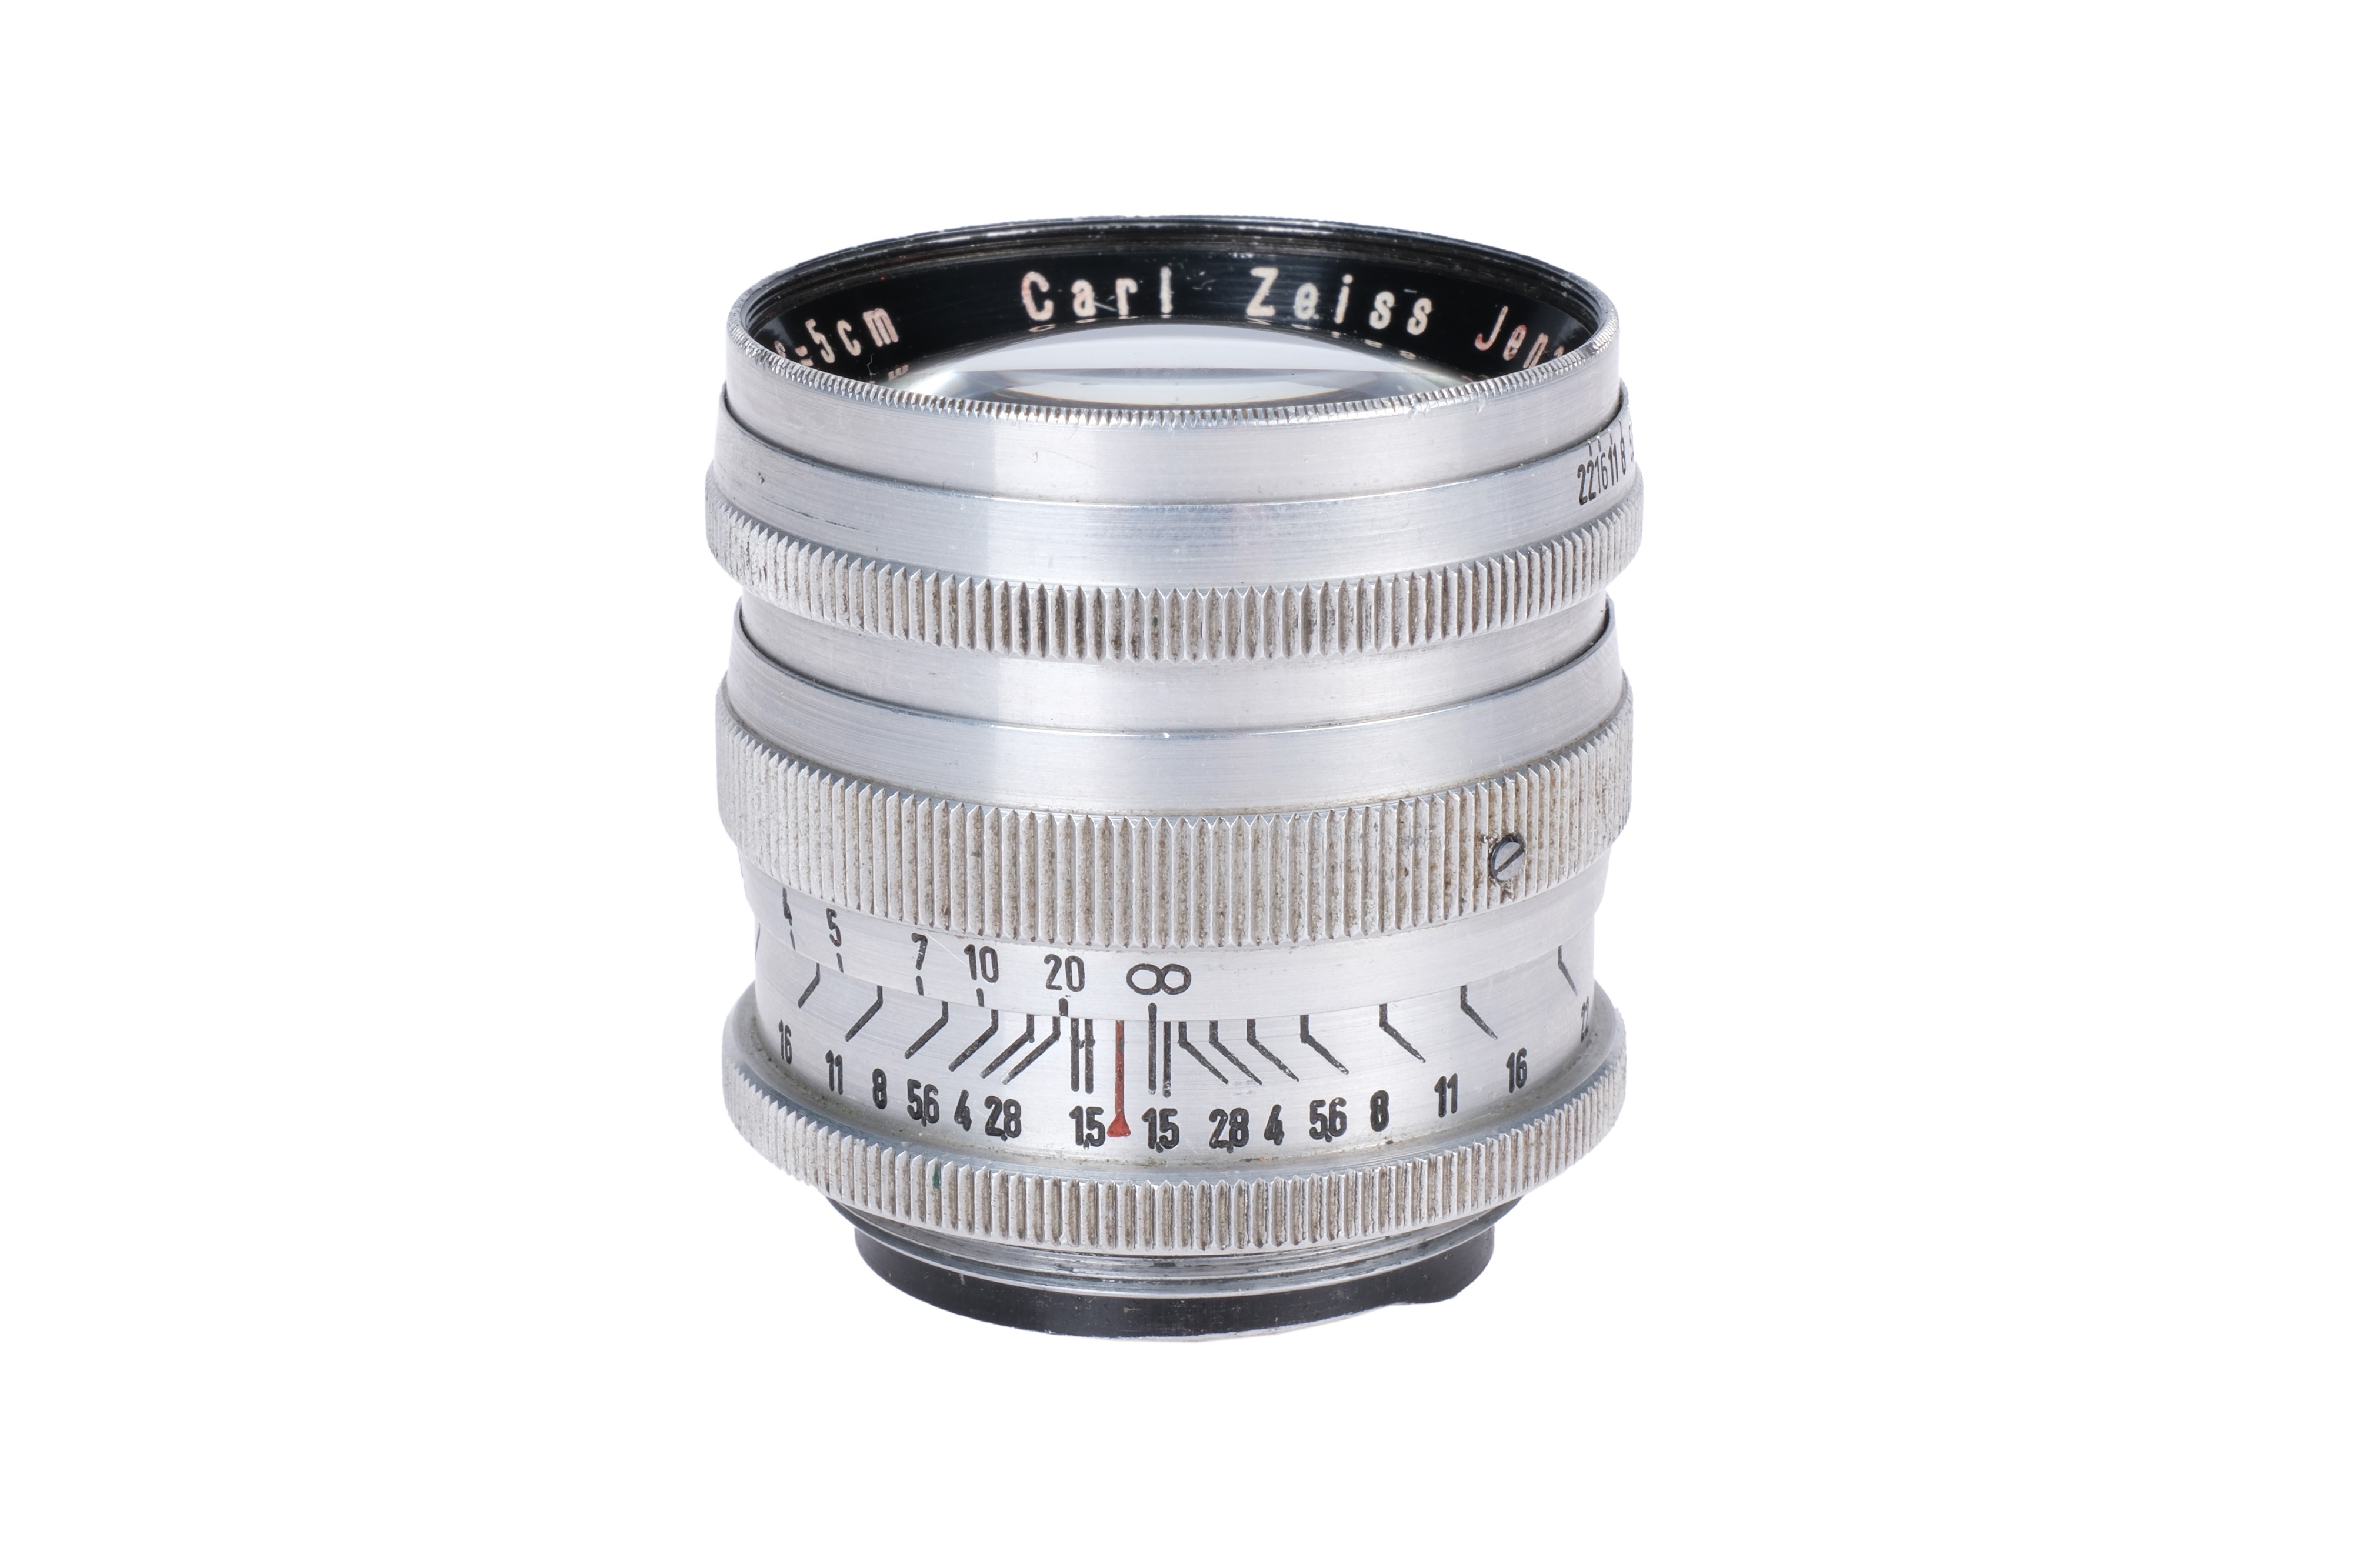 A Carl Zeiss Jena Sonnar f/1.5 50mm Lens,